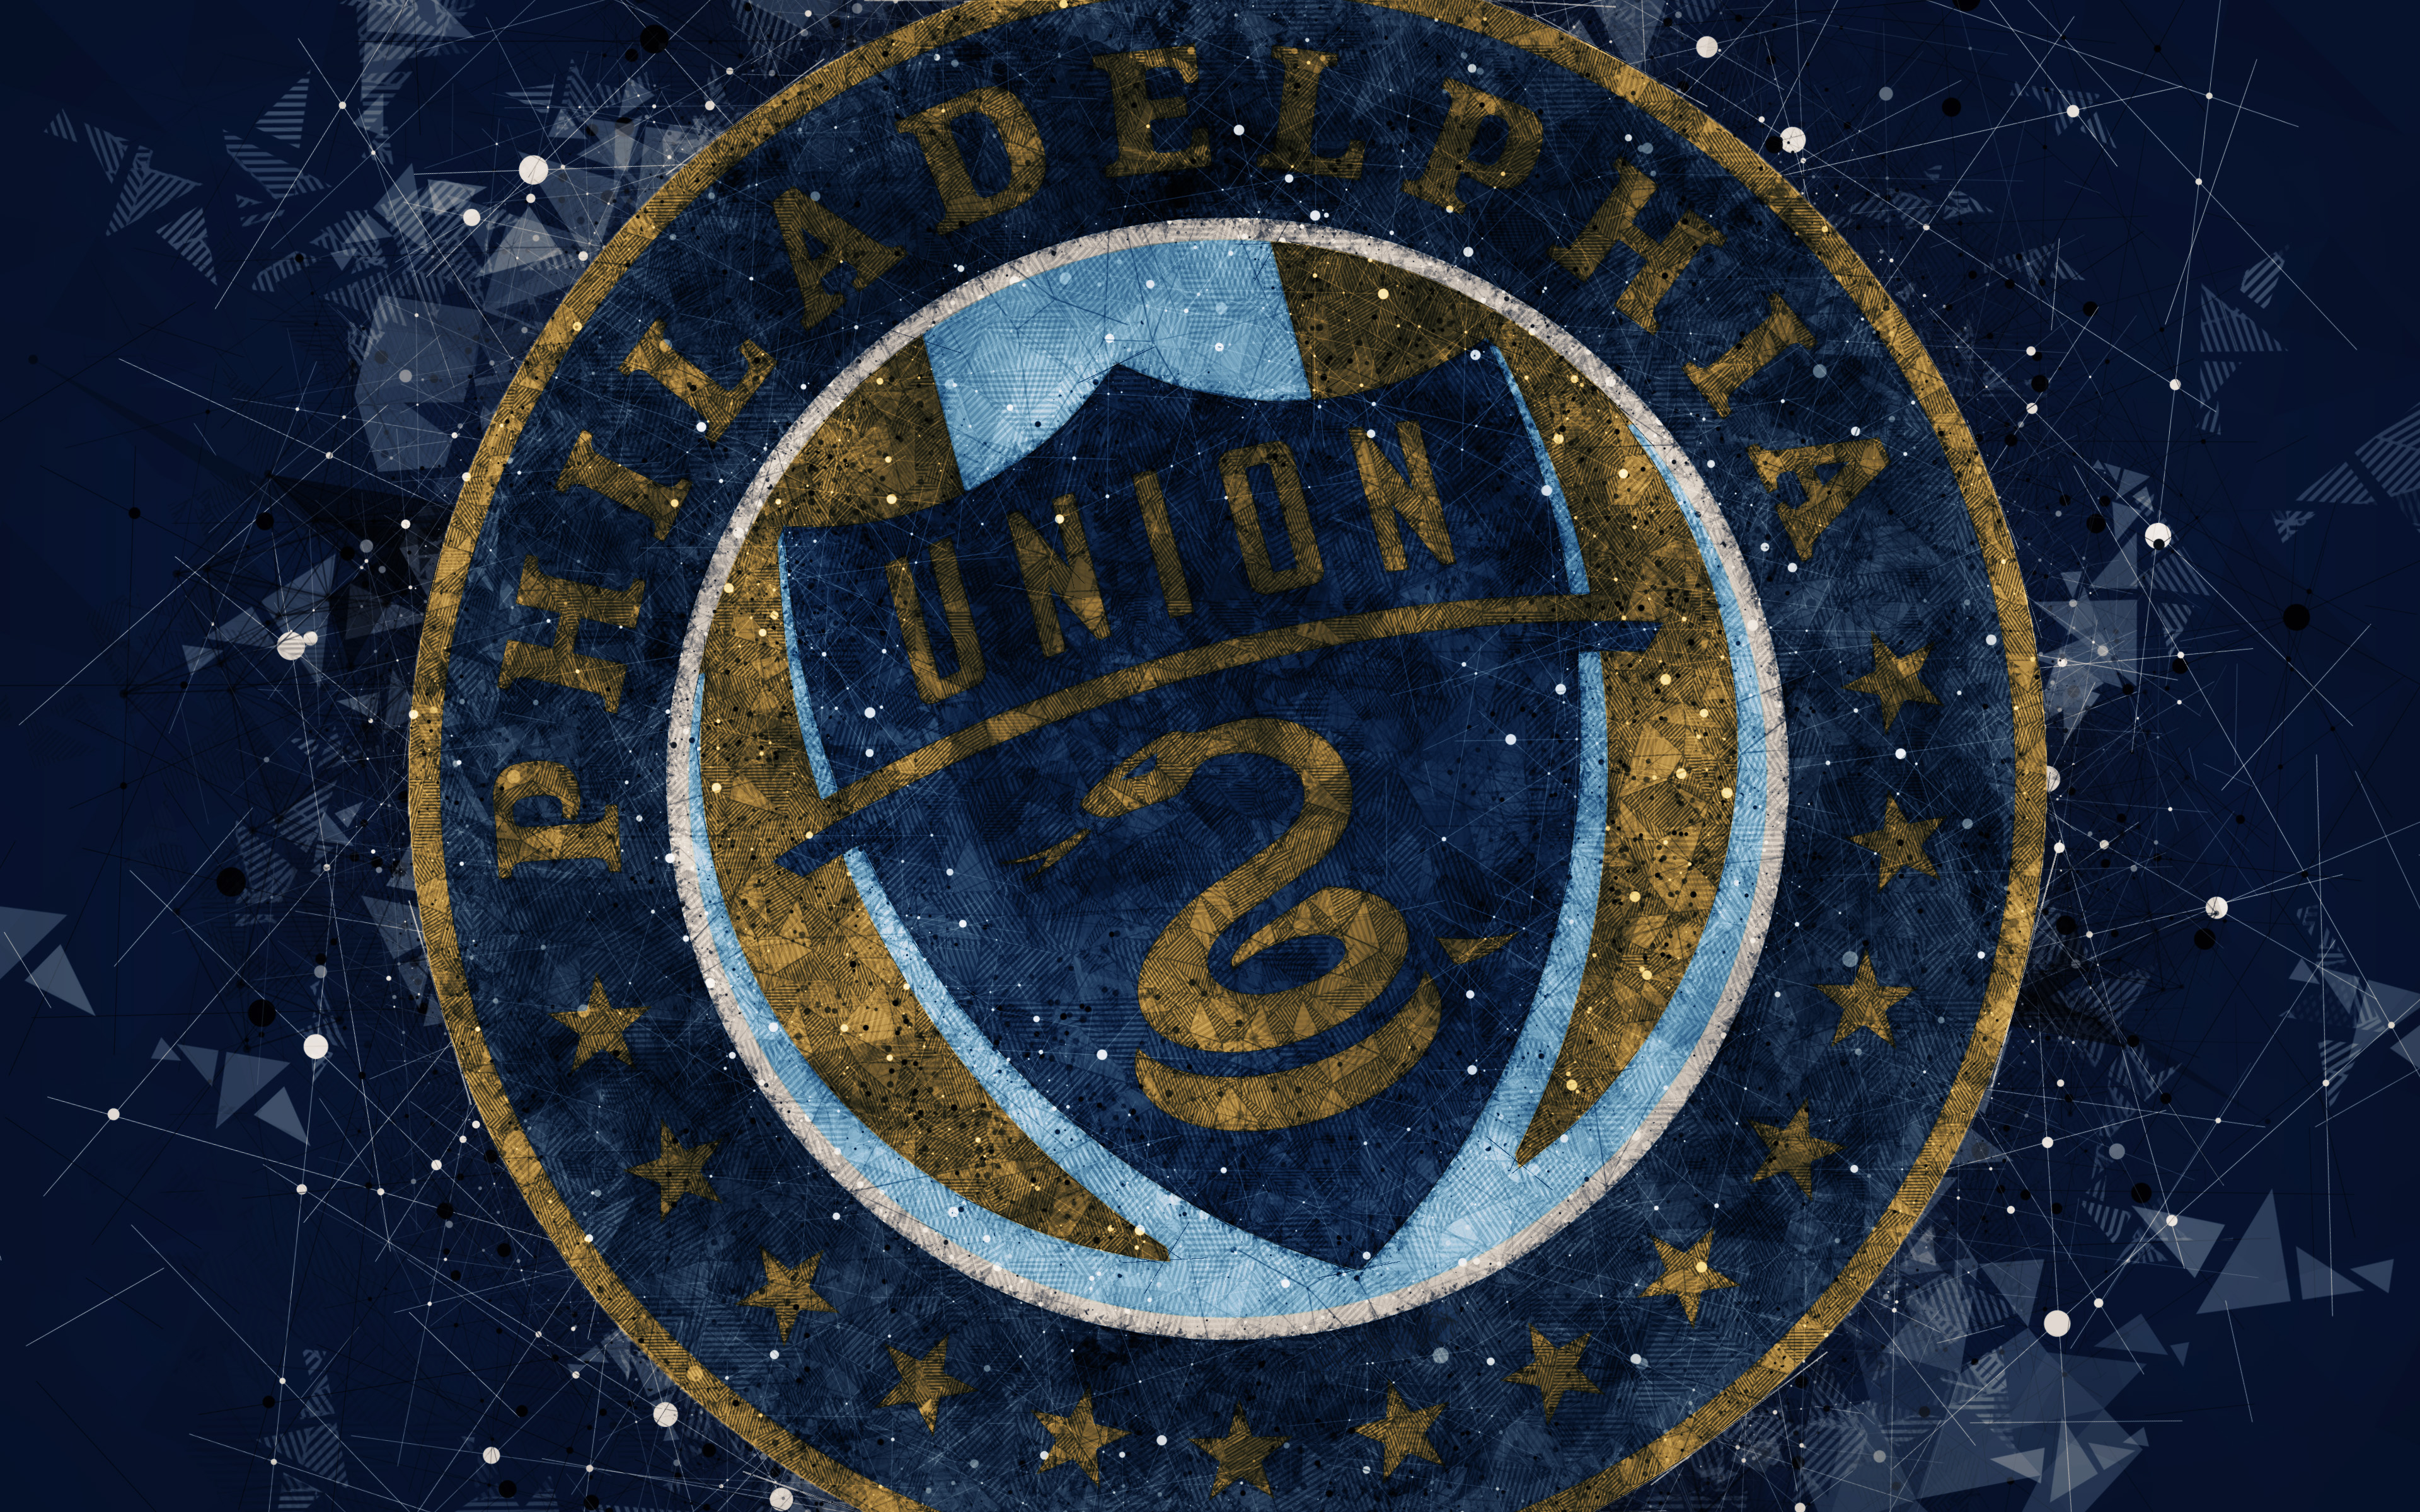 wallpaper philadelphia union jersey